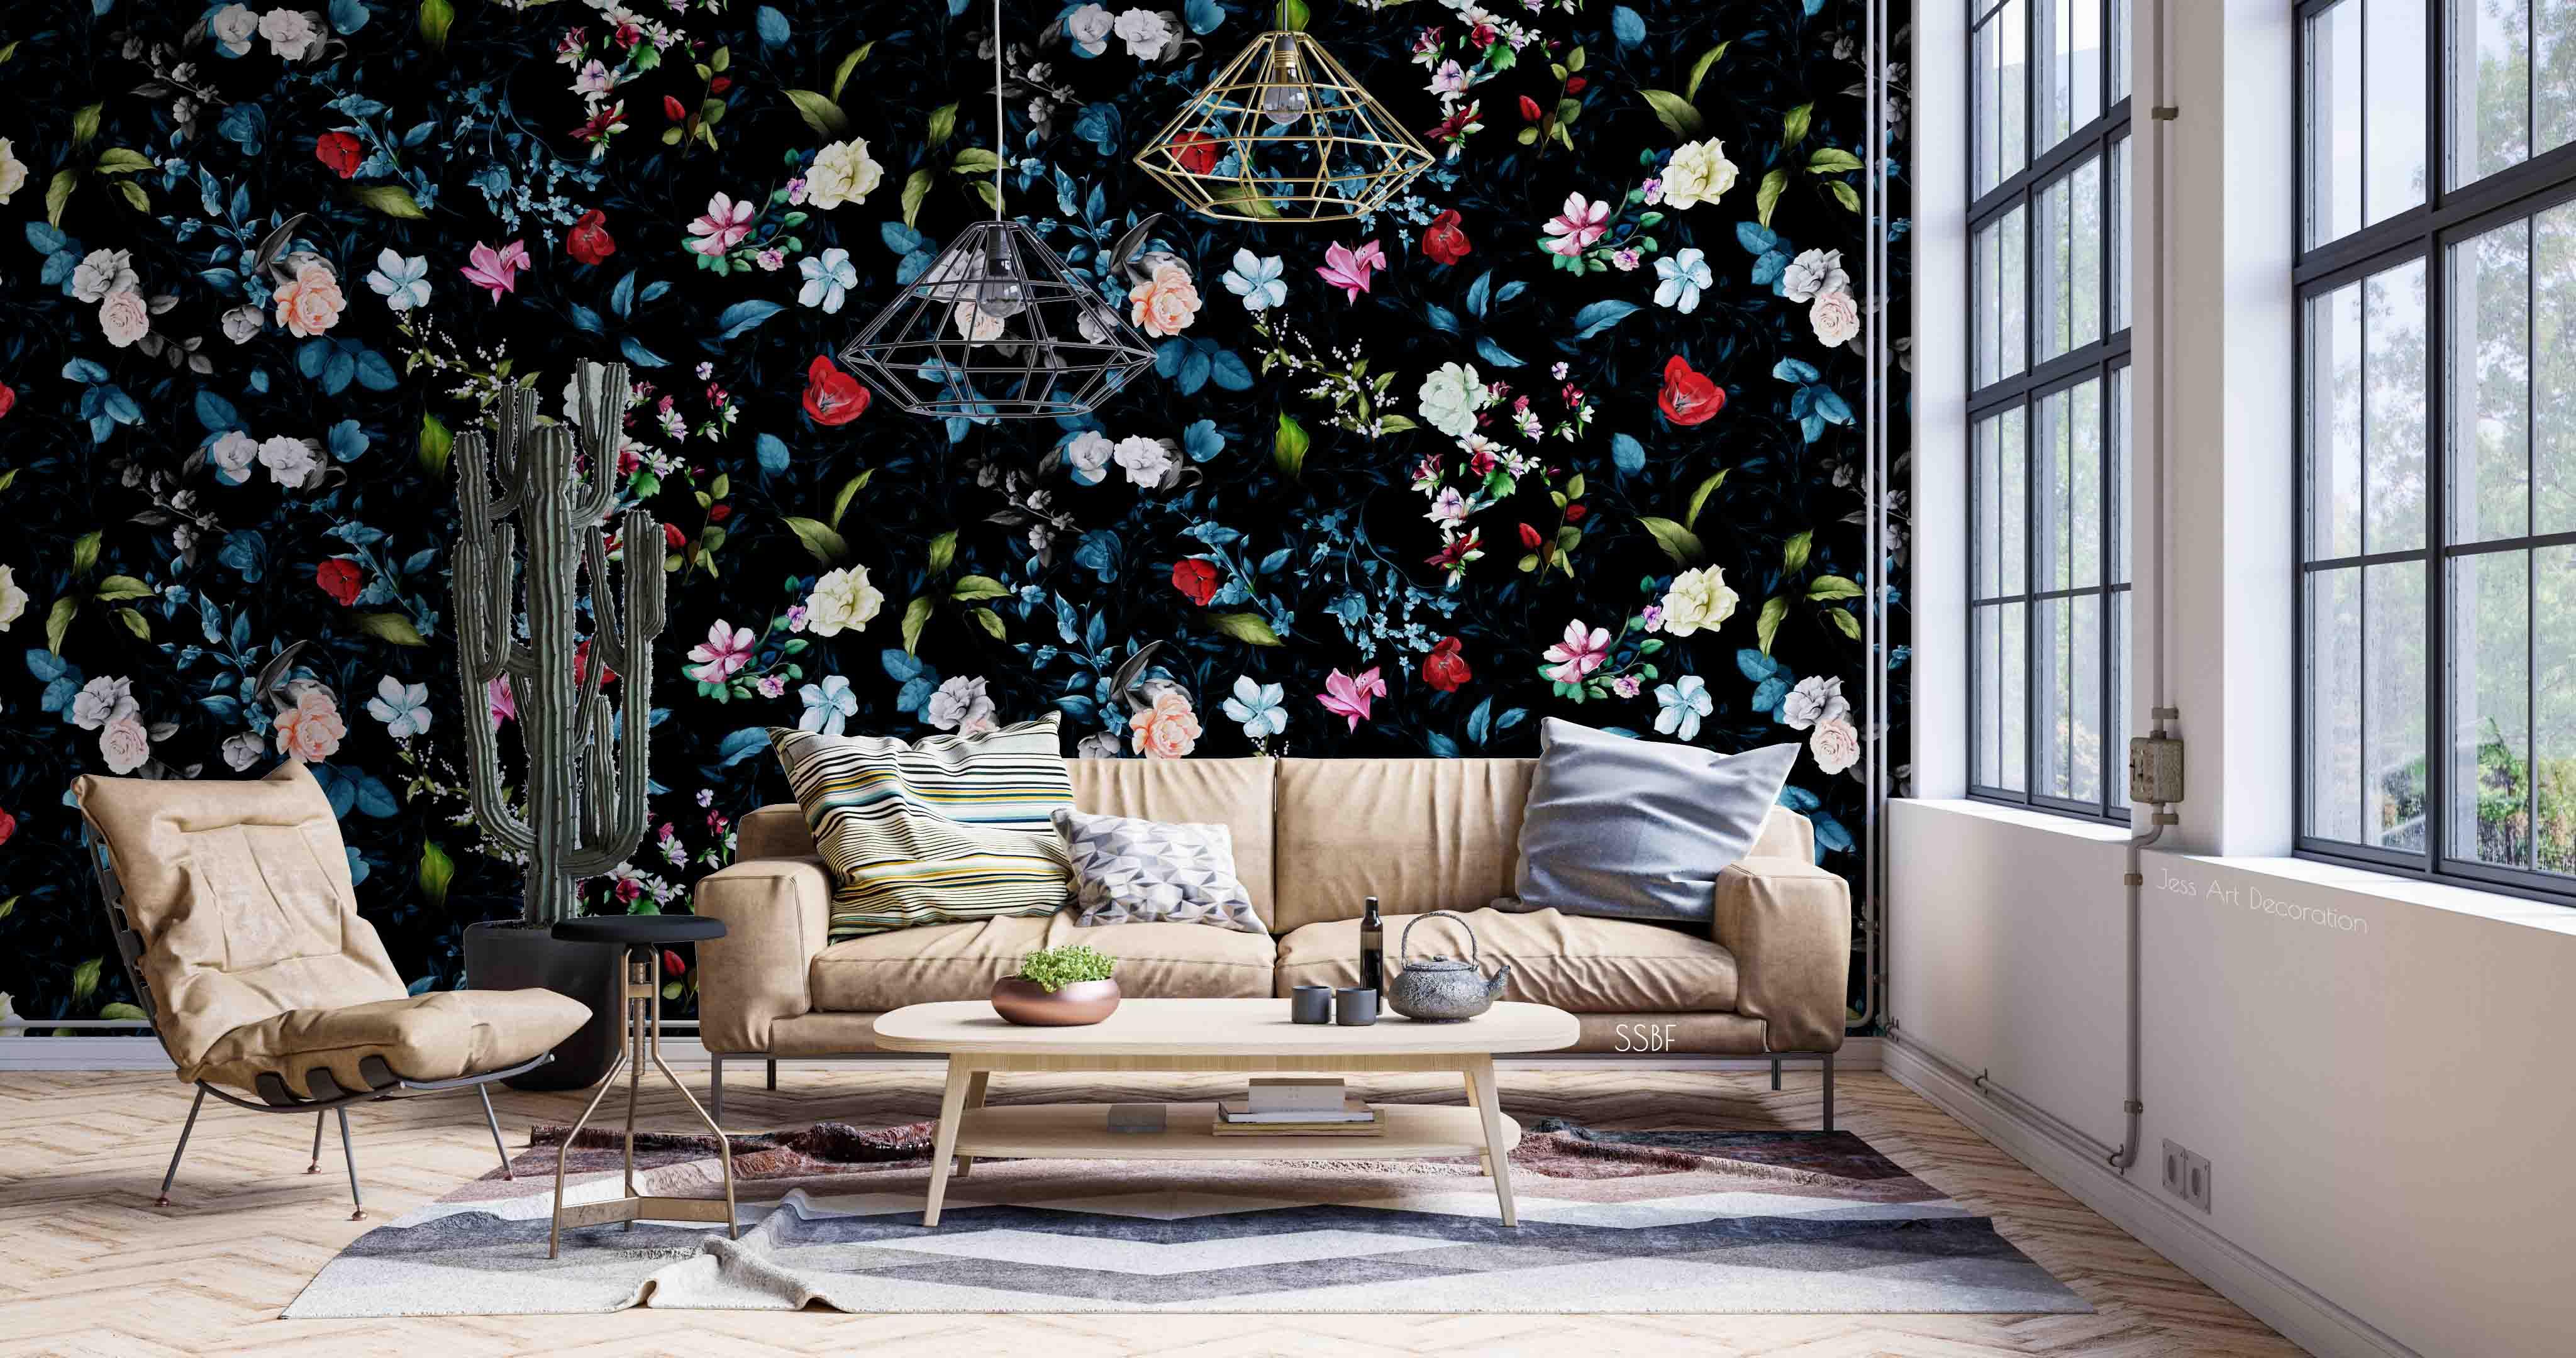 3D Vintage Idyllic Flowers Black Background Wall Mural Wallpaper GD 3607- Jess Art Decoration